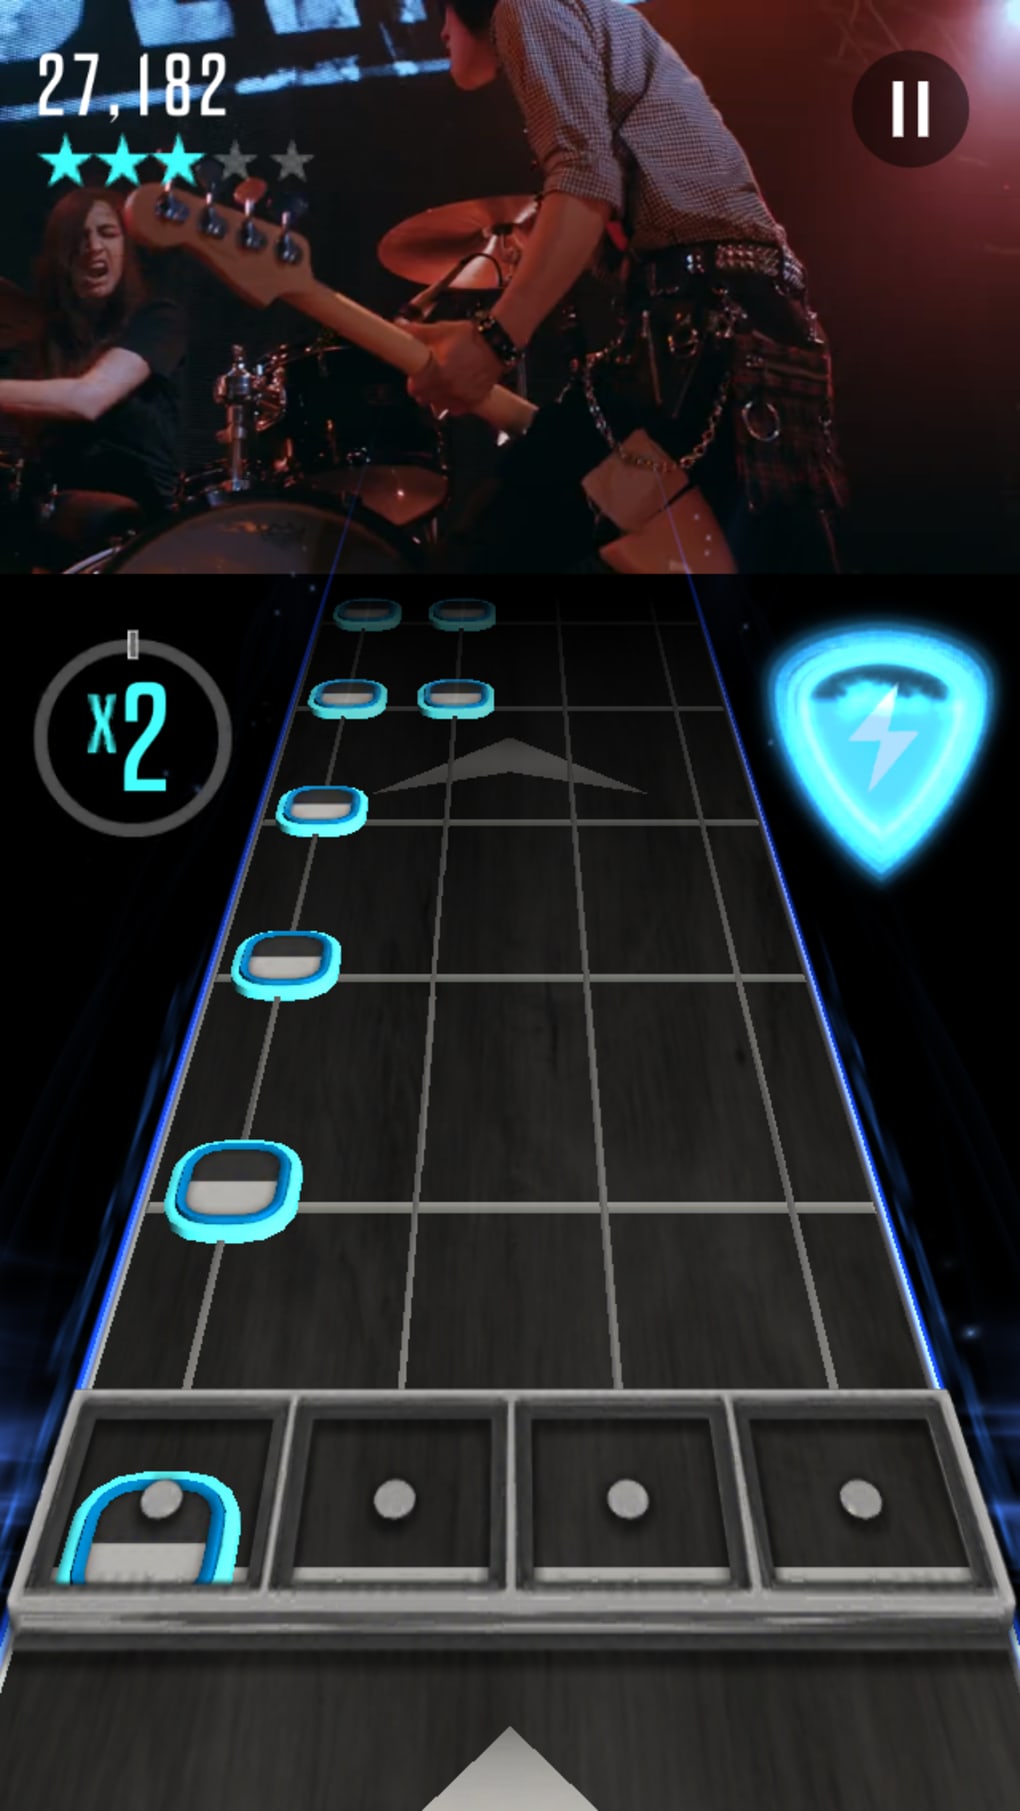 Fare Motel Taiko mave Guitar Hero Live for iPhone - Download